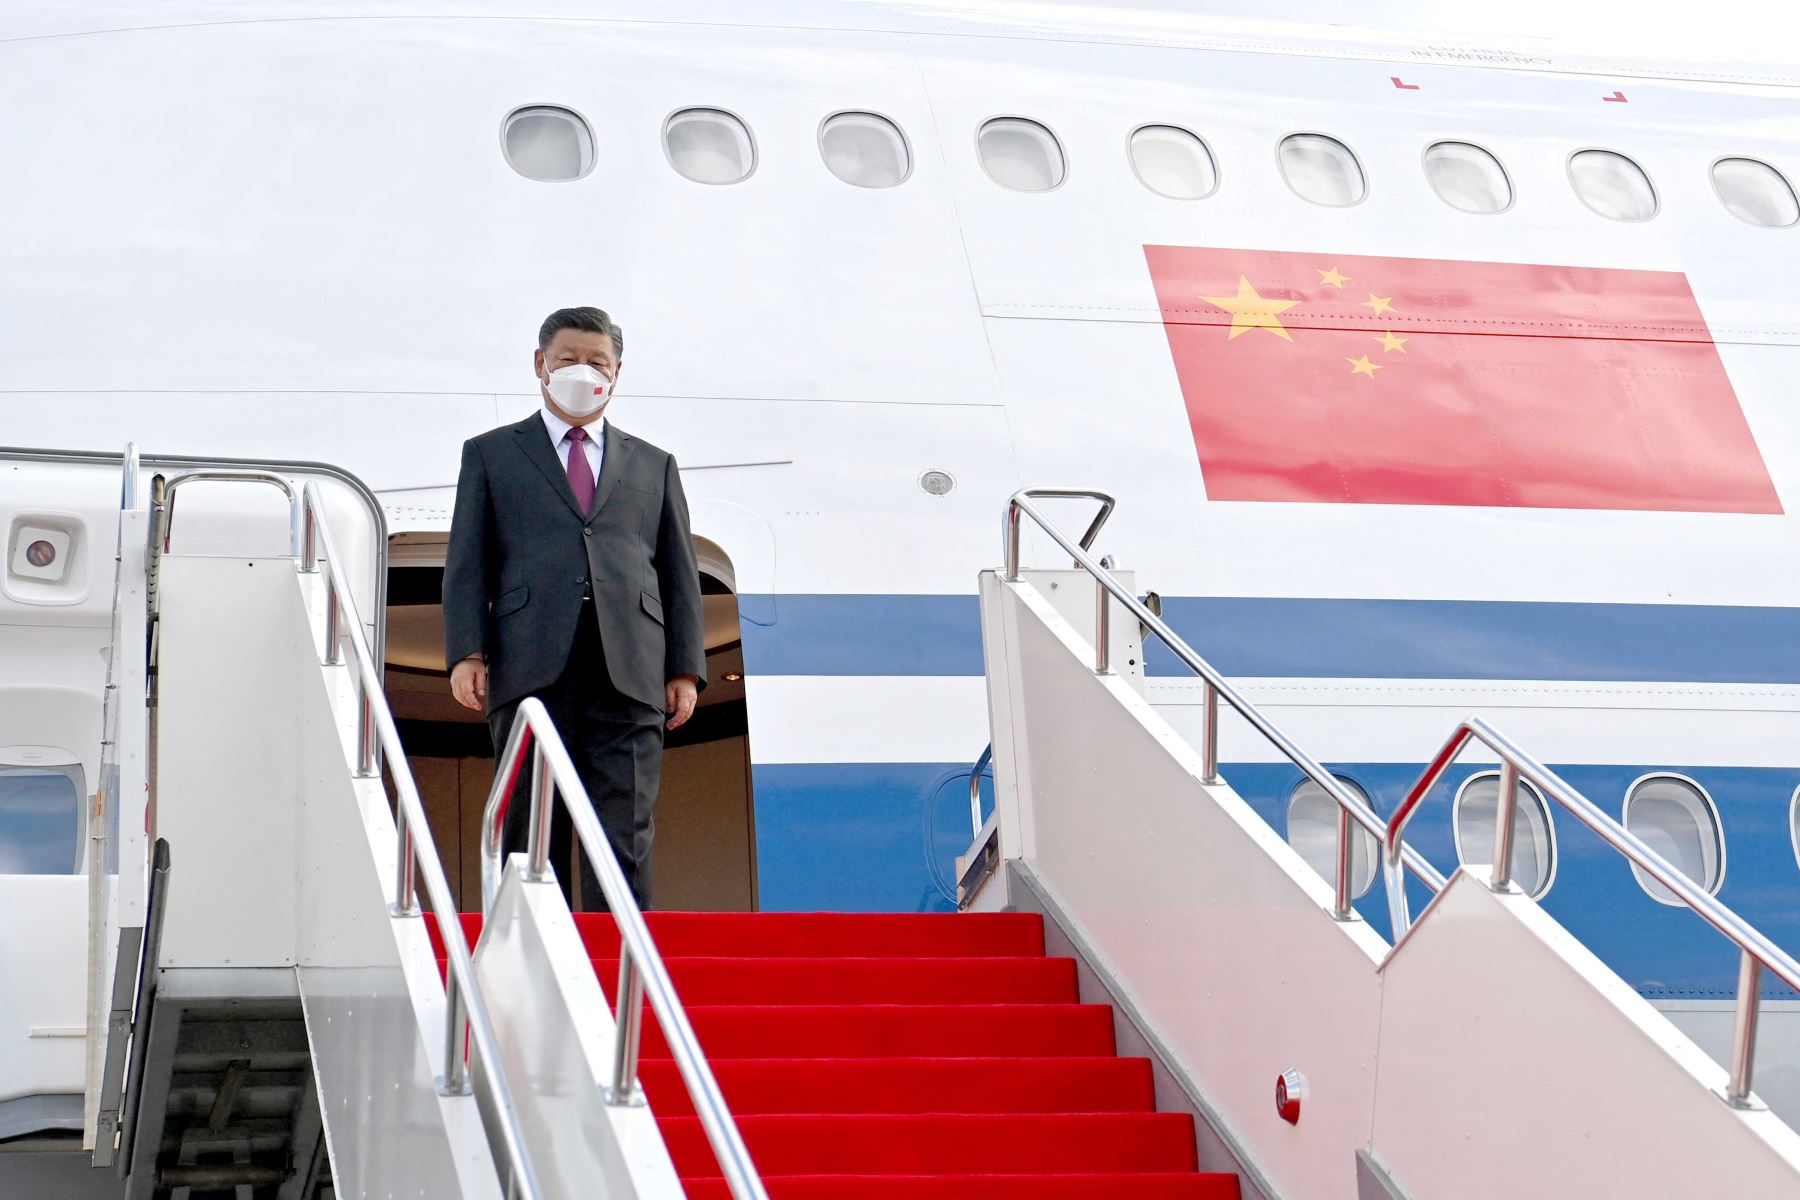 Xi Jinping aterrizó en Uzbequistán donde se reunirá con Vladimir Putin [video]